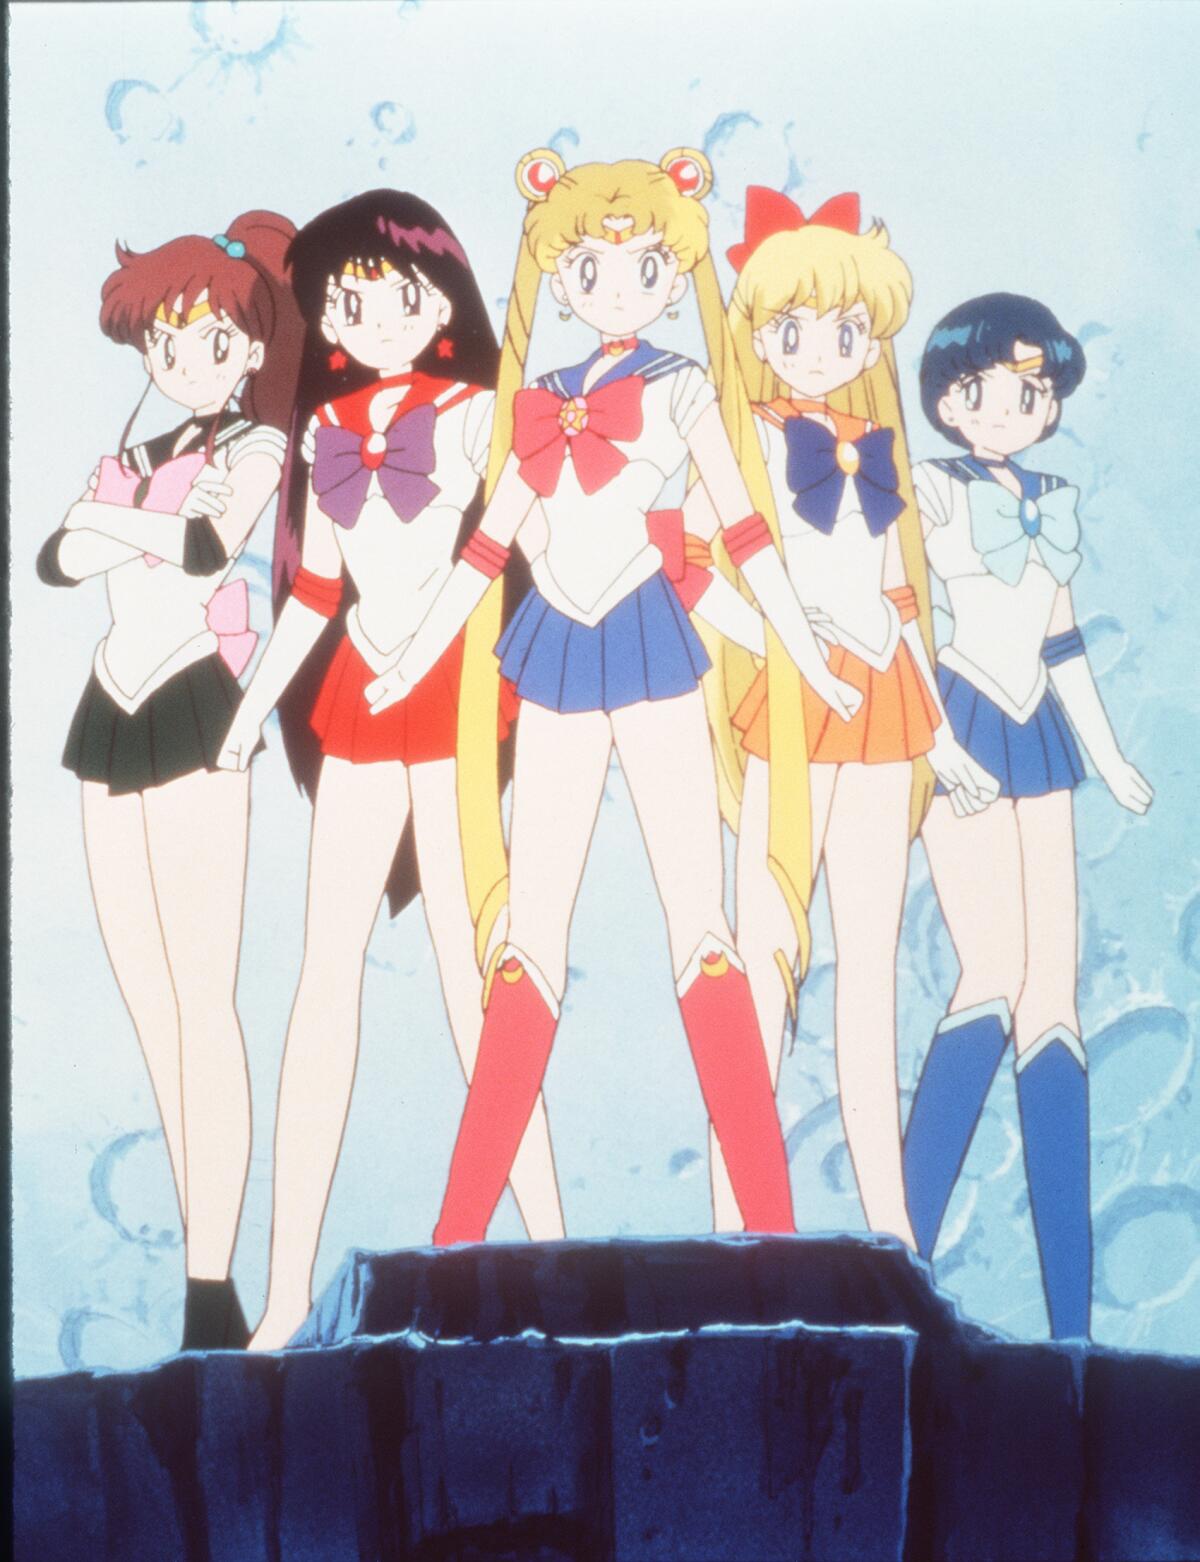  A scene from the cartoon series "Sailor Moon.”